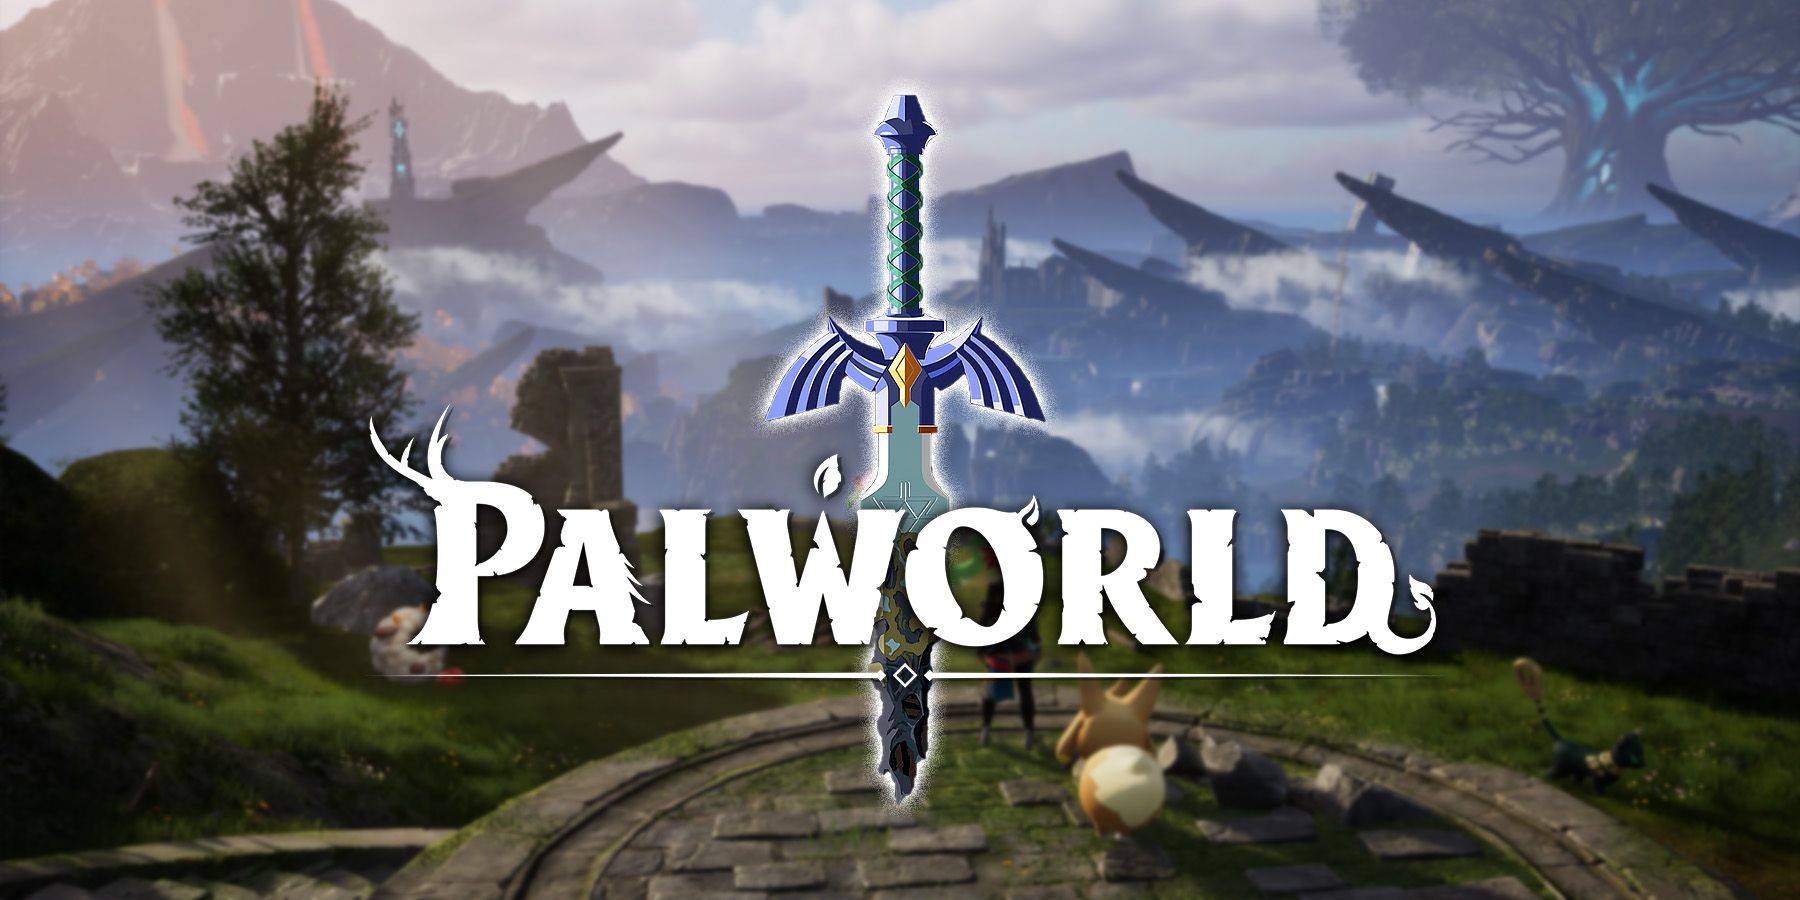 Palworld logo with damaged Master Sword in background